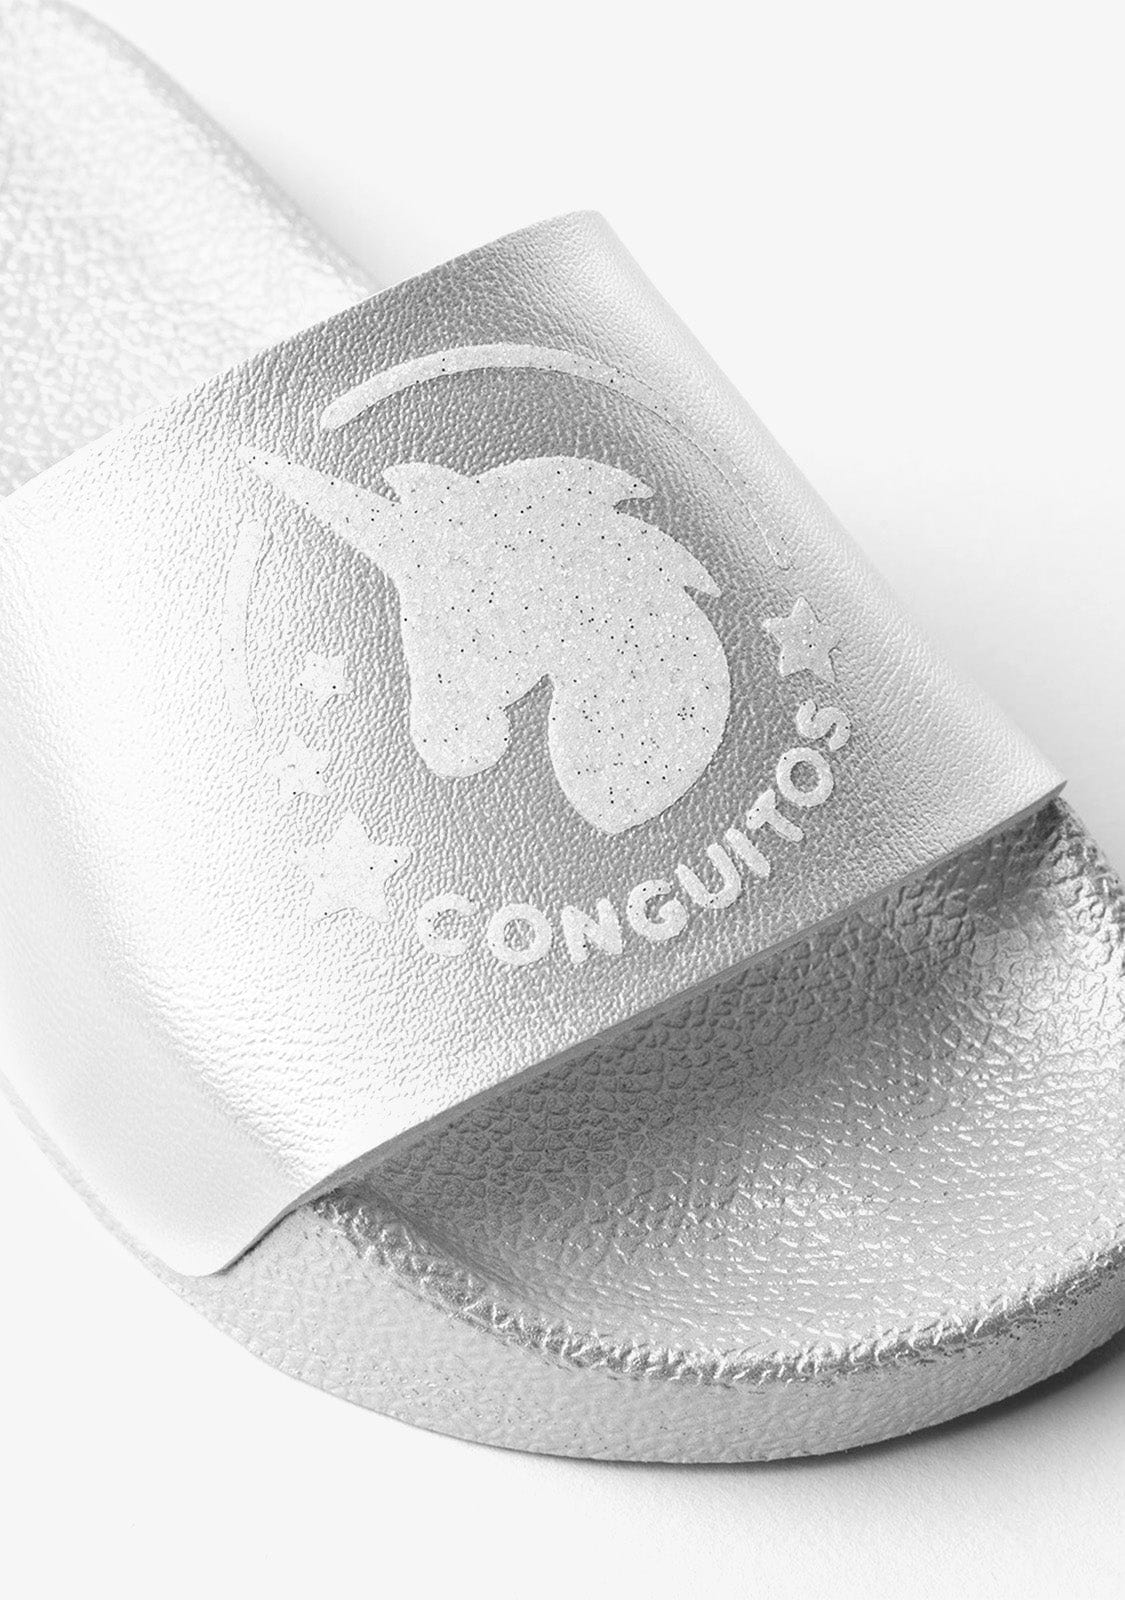 CONGUITOS Shoes Unicorn’s Silver Pool Slide Sandals